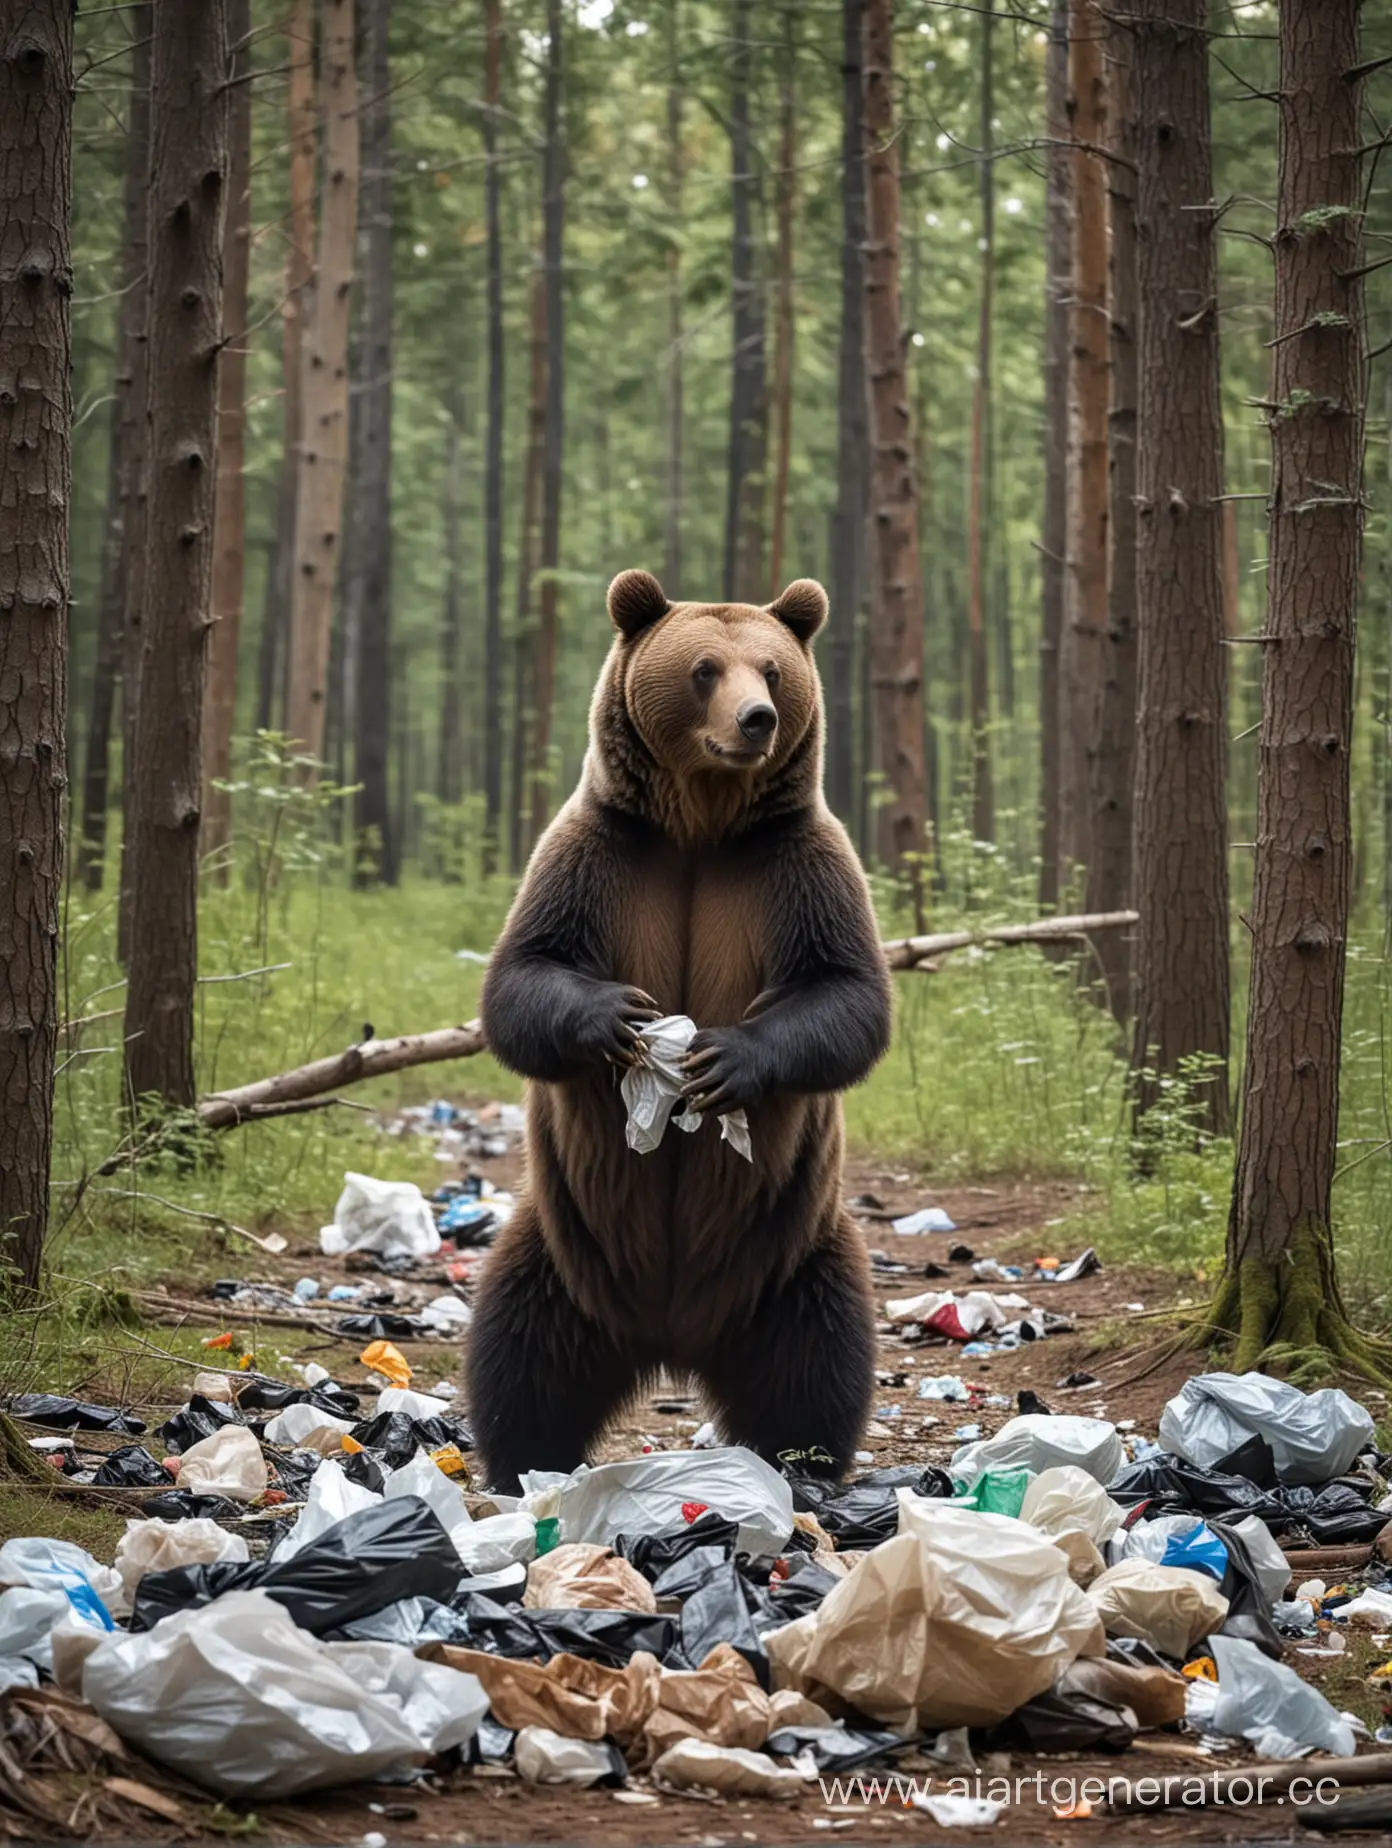 медведь убирает мусор на полянке посреди леса